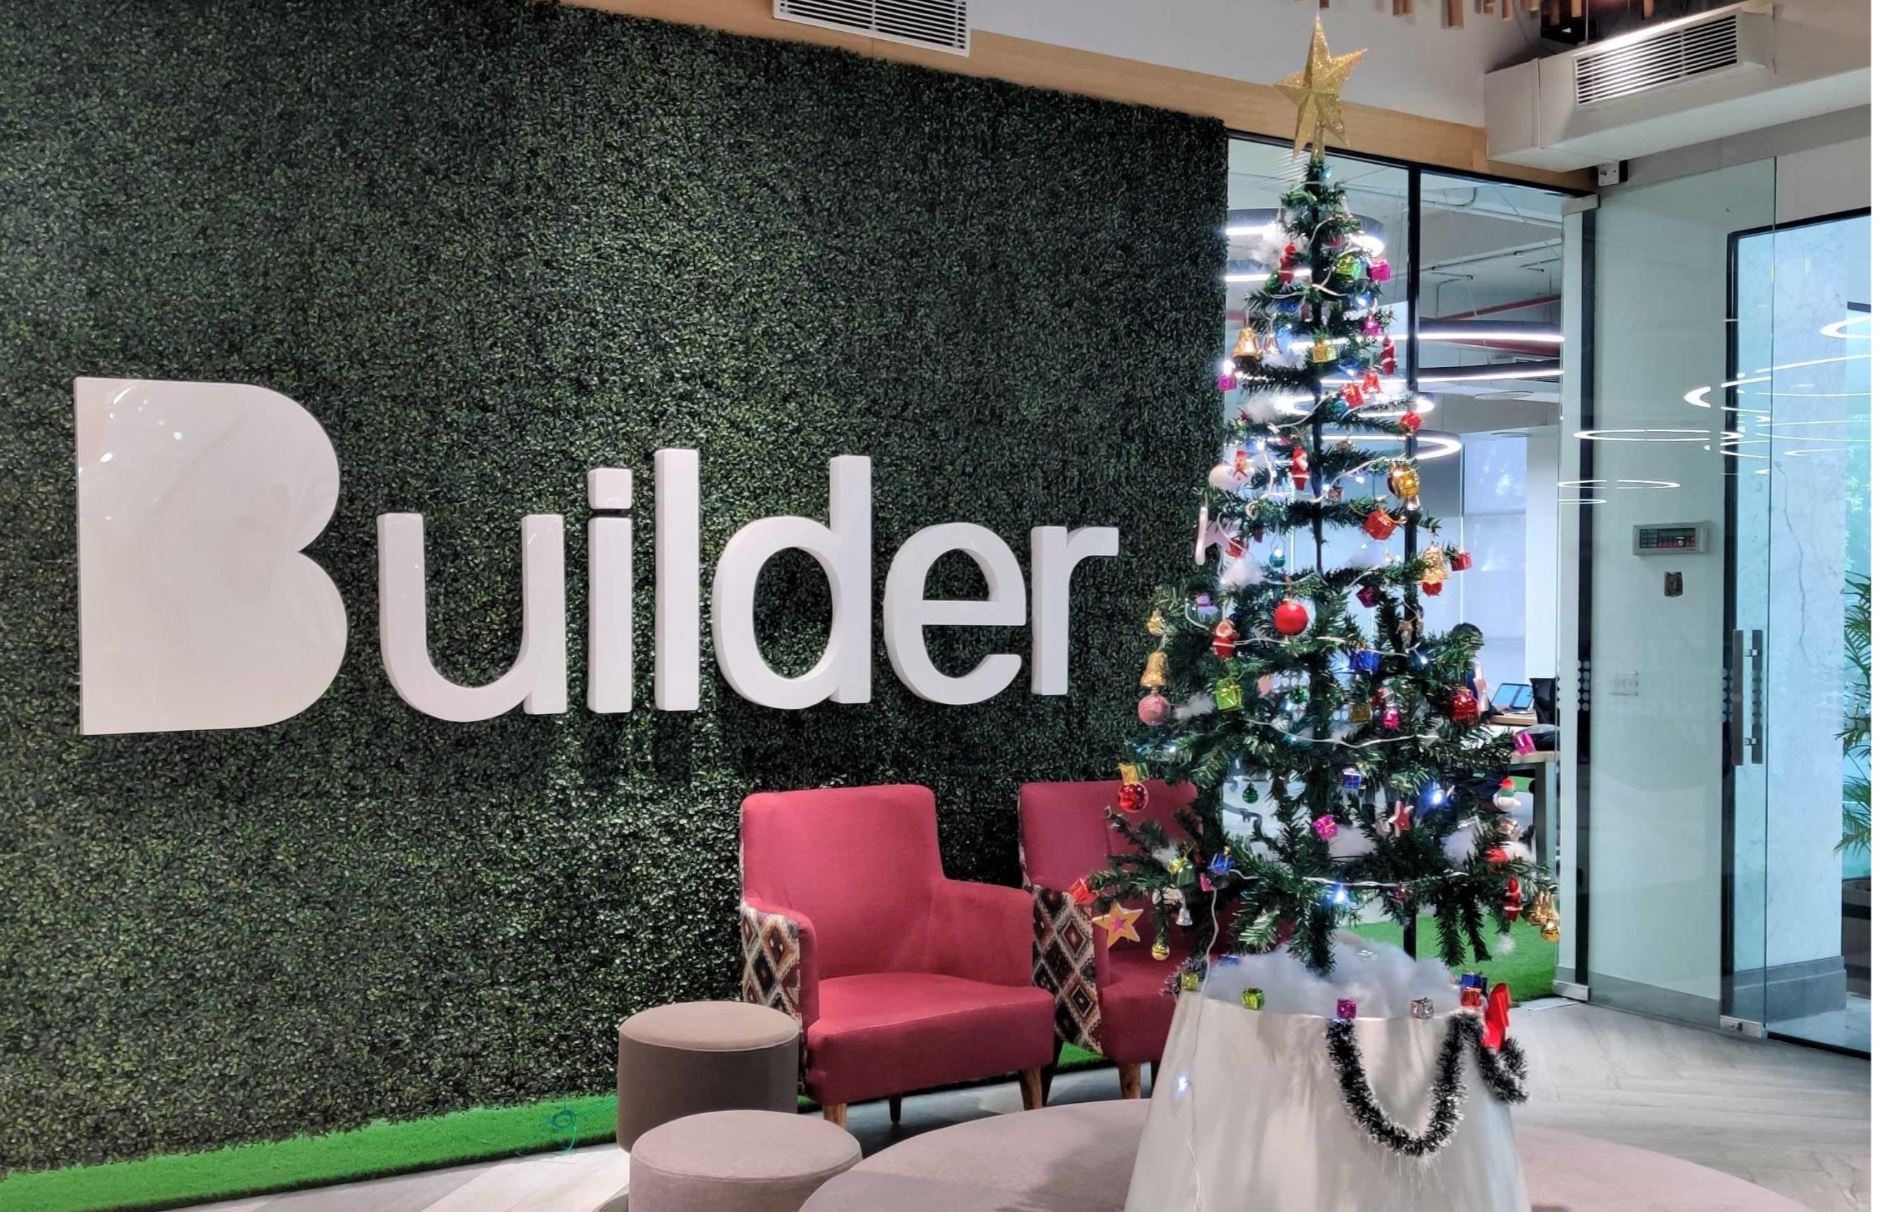 Builder holiday update